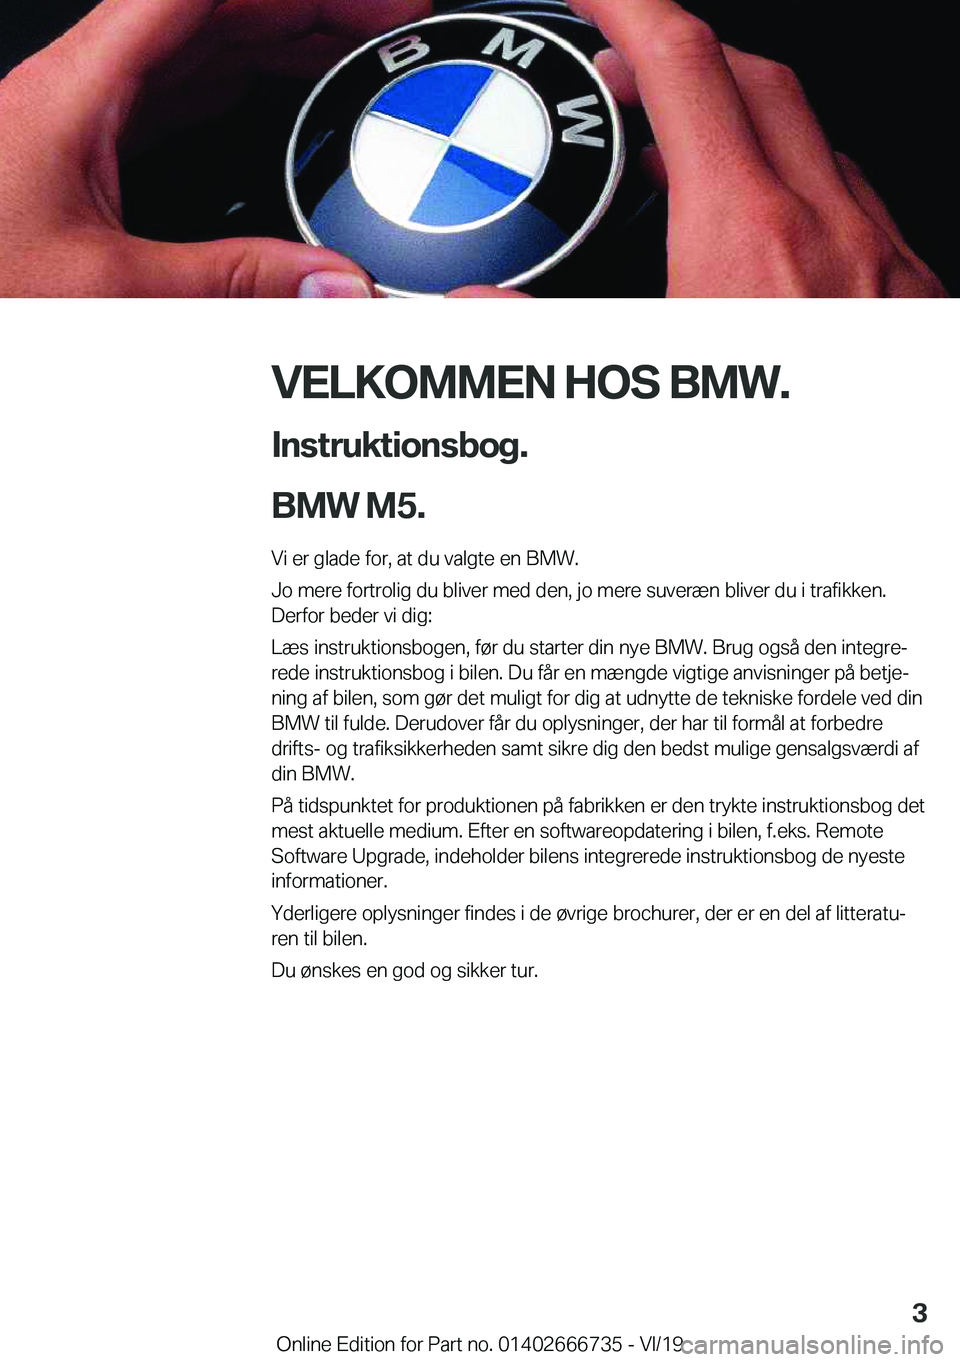 BMW M5 2020  InstruktionsbØger (in Danish) �V�E�L�K�O�M�M�E�N��H�O�S��B�M�W�.
�I�n�s�t�r�u�k�t�i�o�n�s�b�o�g�.
�B�M�W��M�5�. �V�i��e�r��g�l�a�d�e��f�o�r�,��a�t��d�u��v�a�l�g�t�e��e�n��B�M�W�.
�J�o��m�e�r�e��f�o�r�t�r�o�l�i�g��d�u